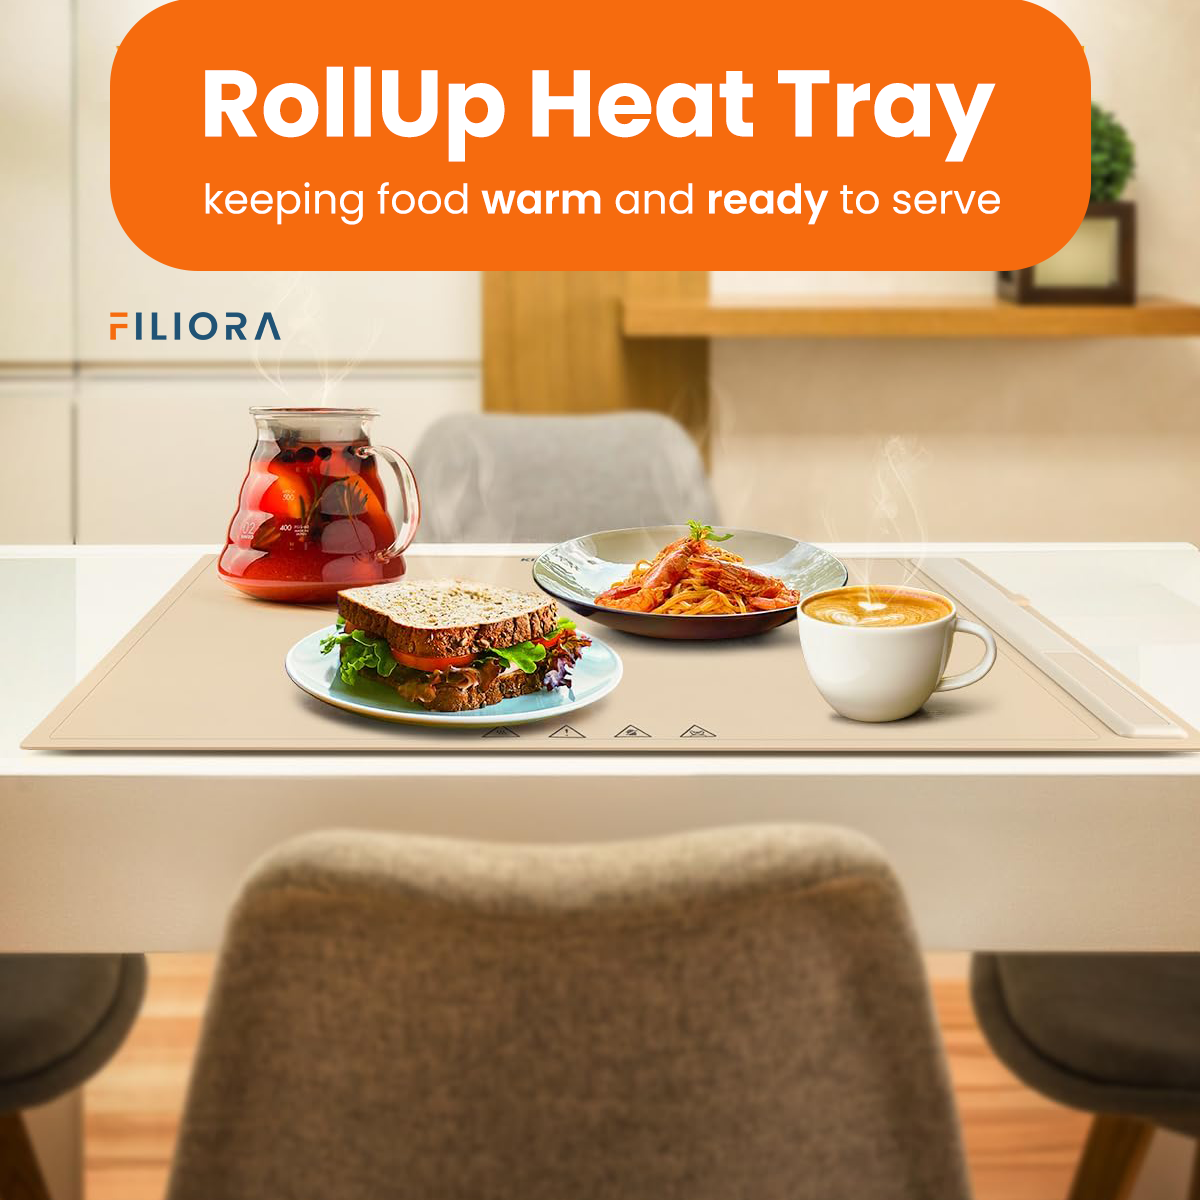 RollUp Heat Tray